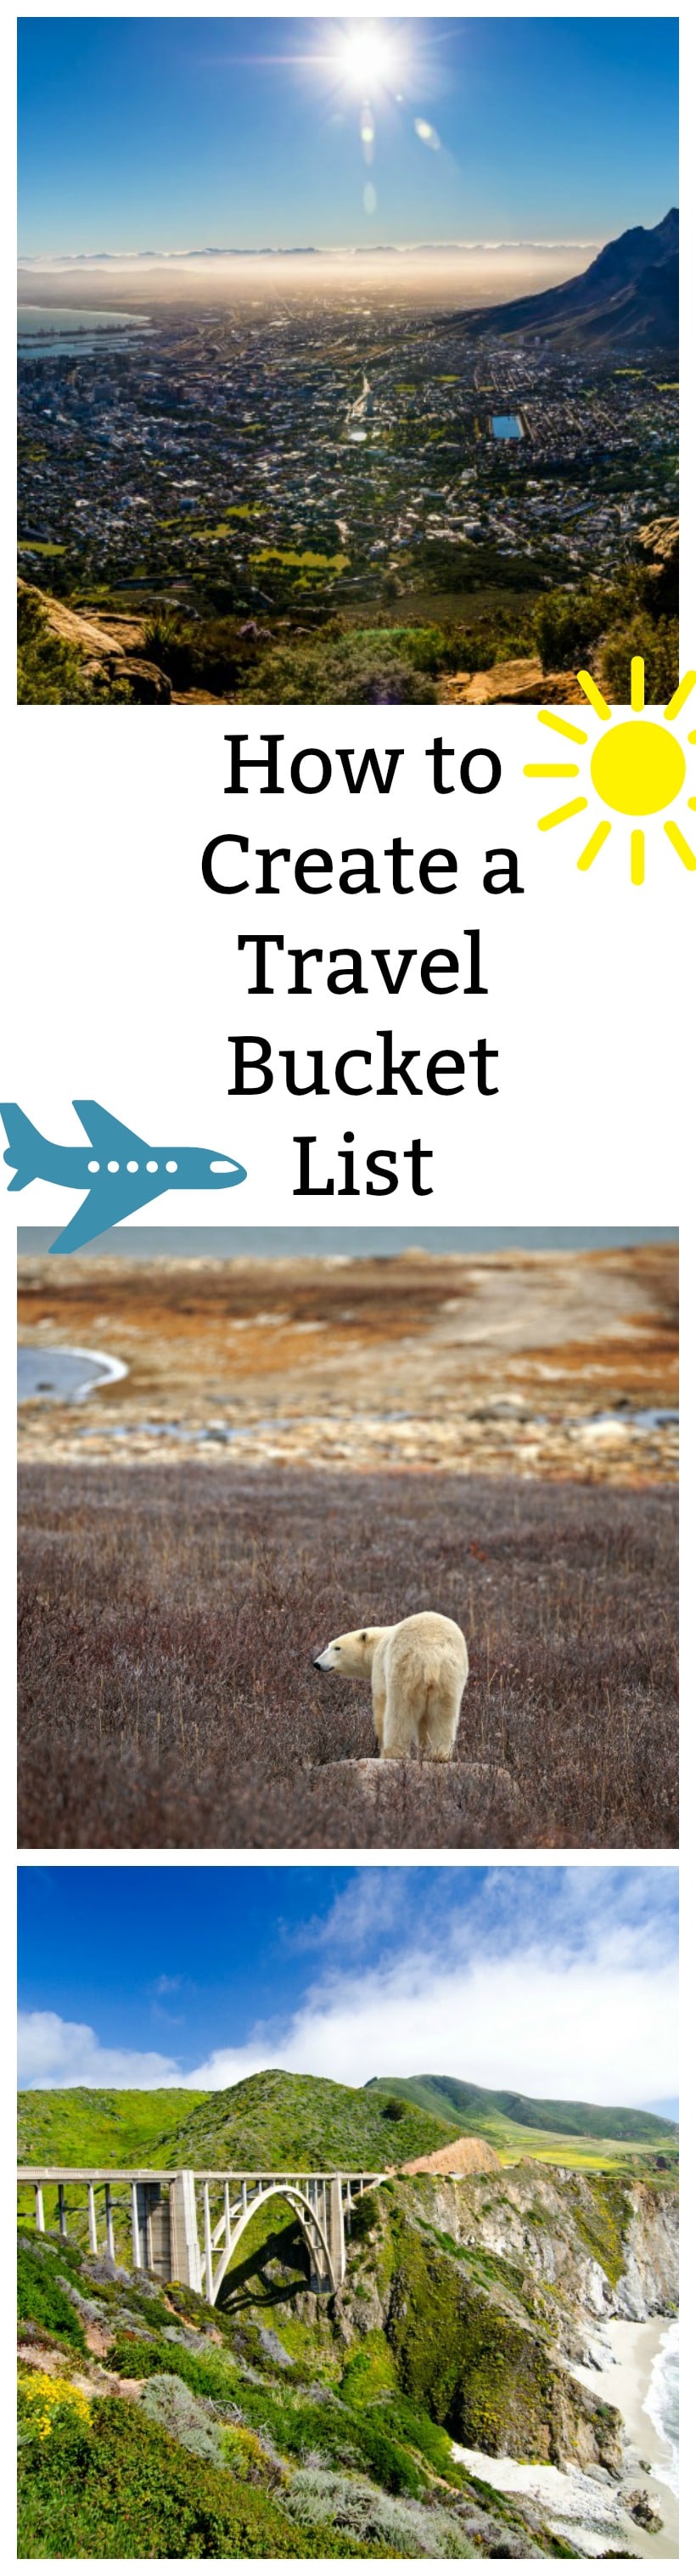 How to Create a Travel Bucket List